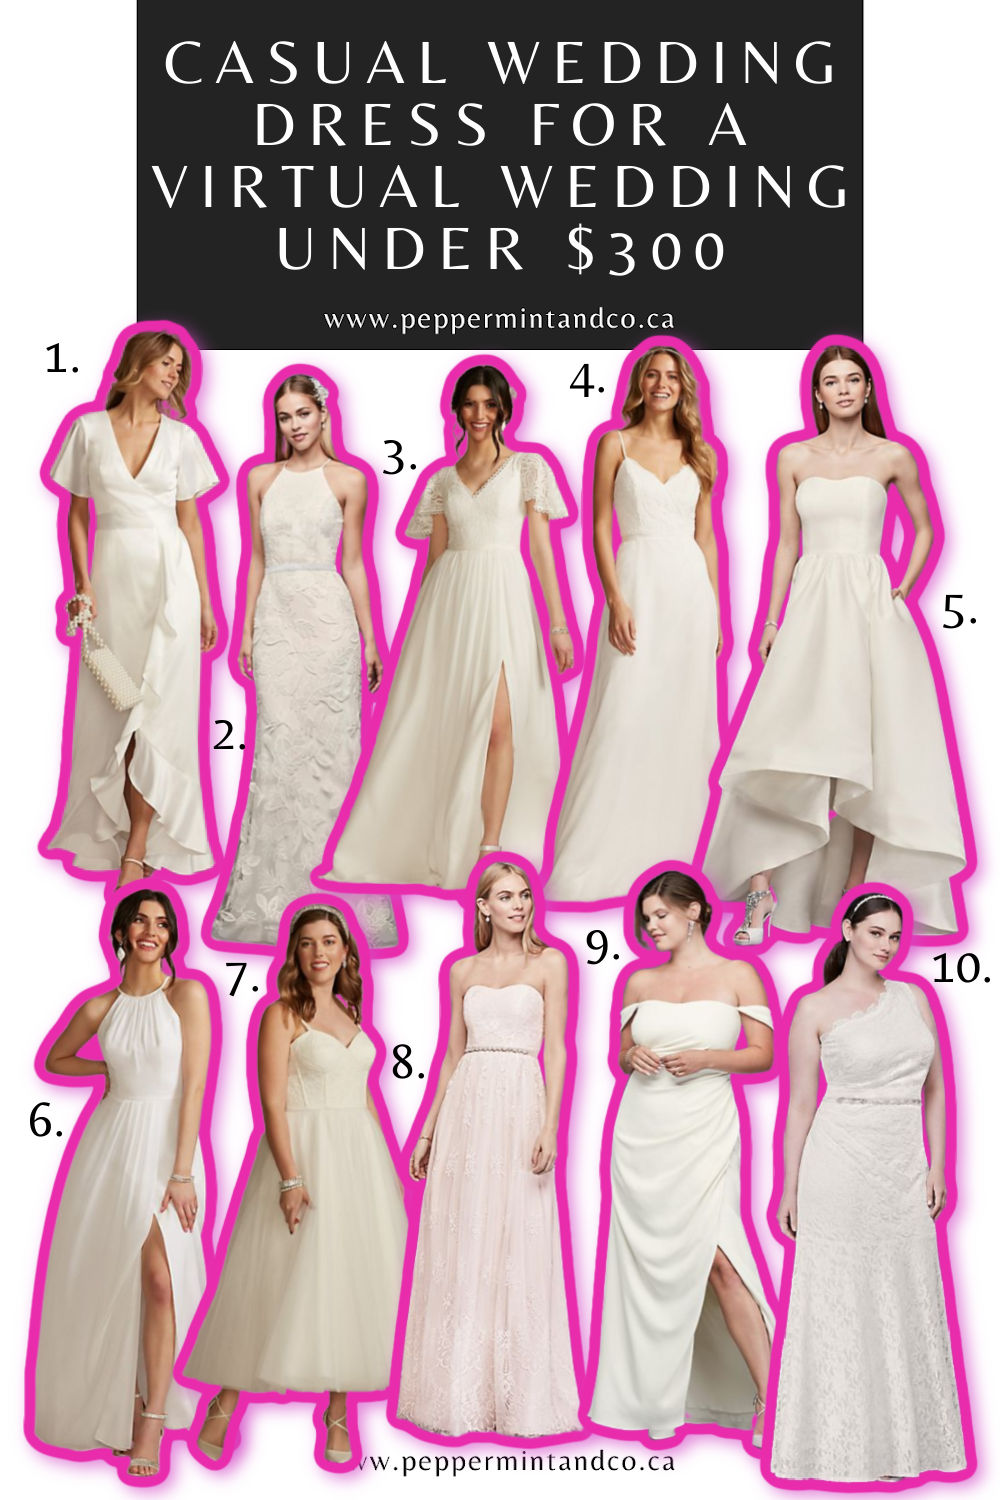 Casual Wedding Dresses under $300